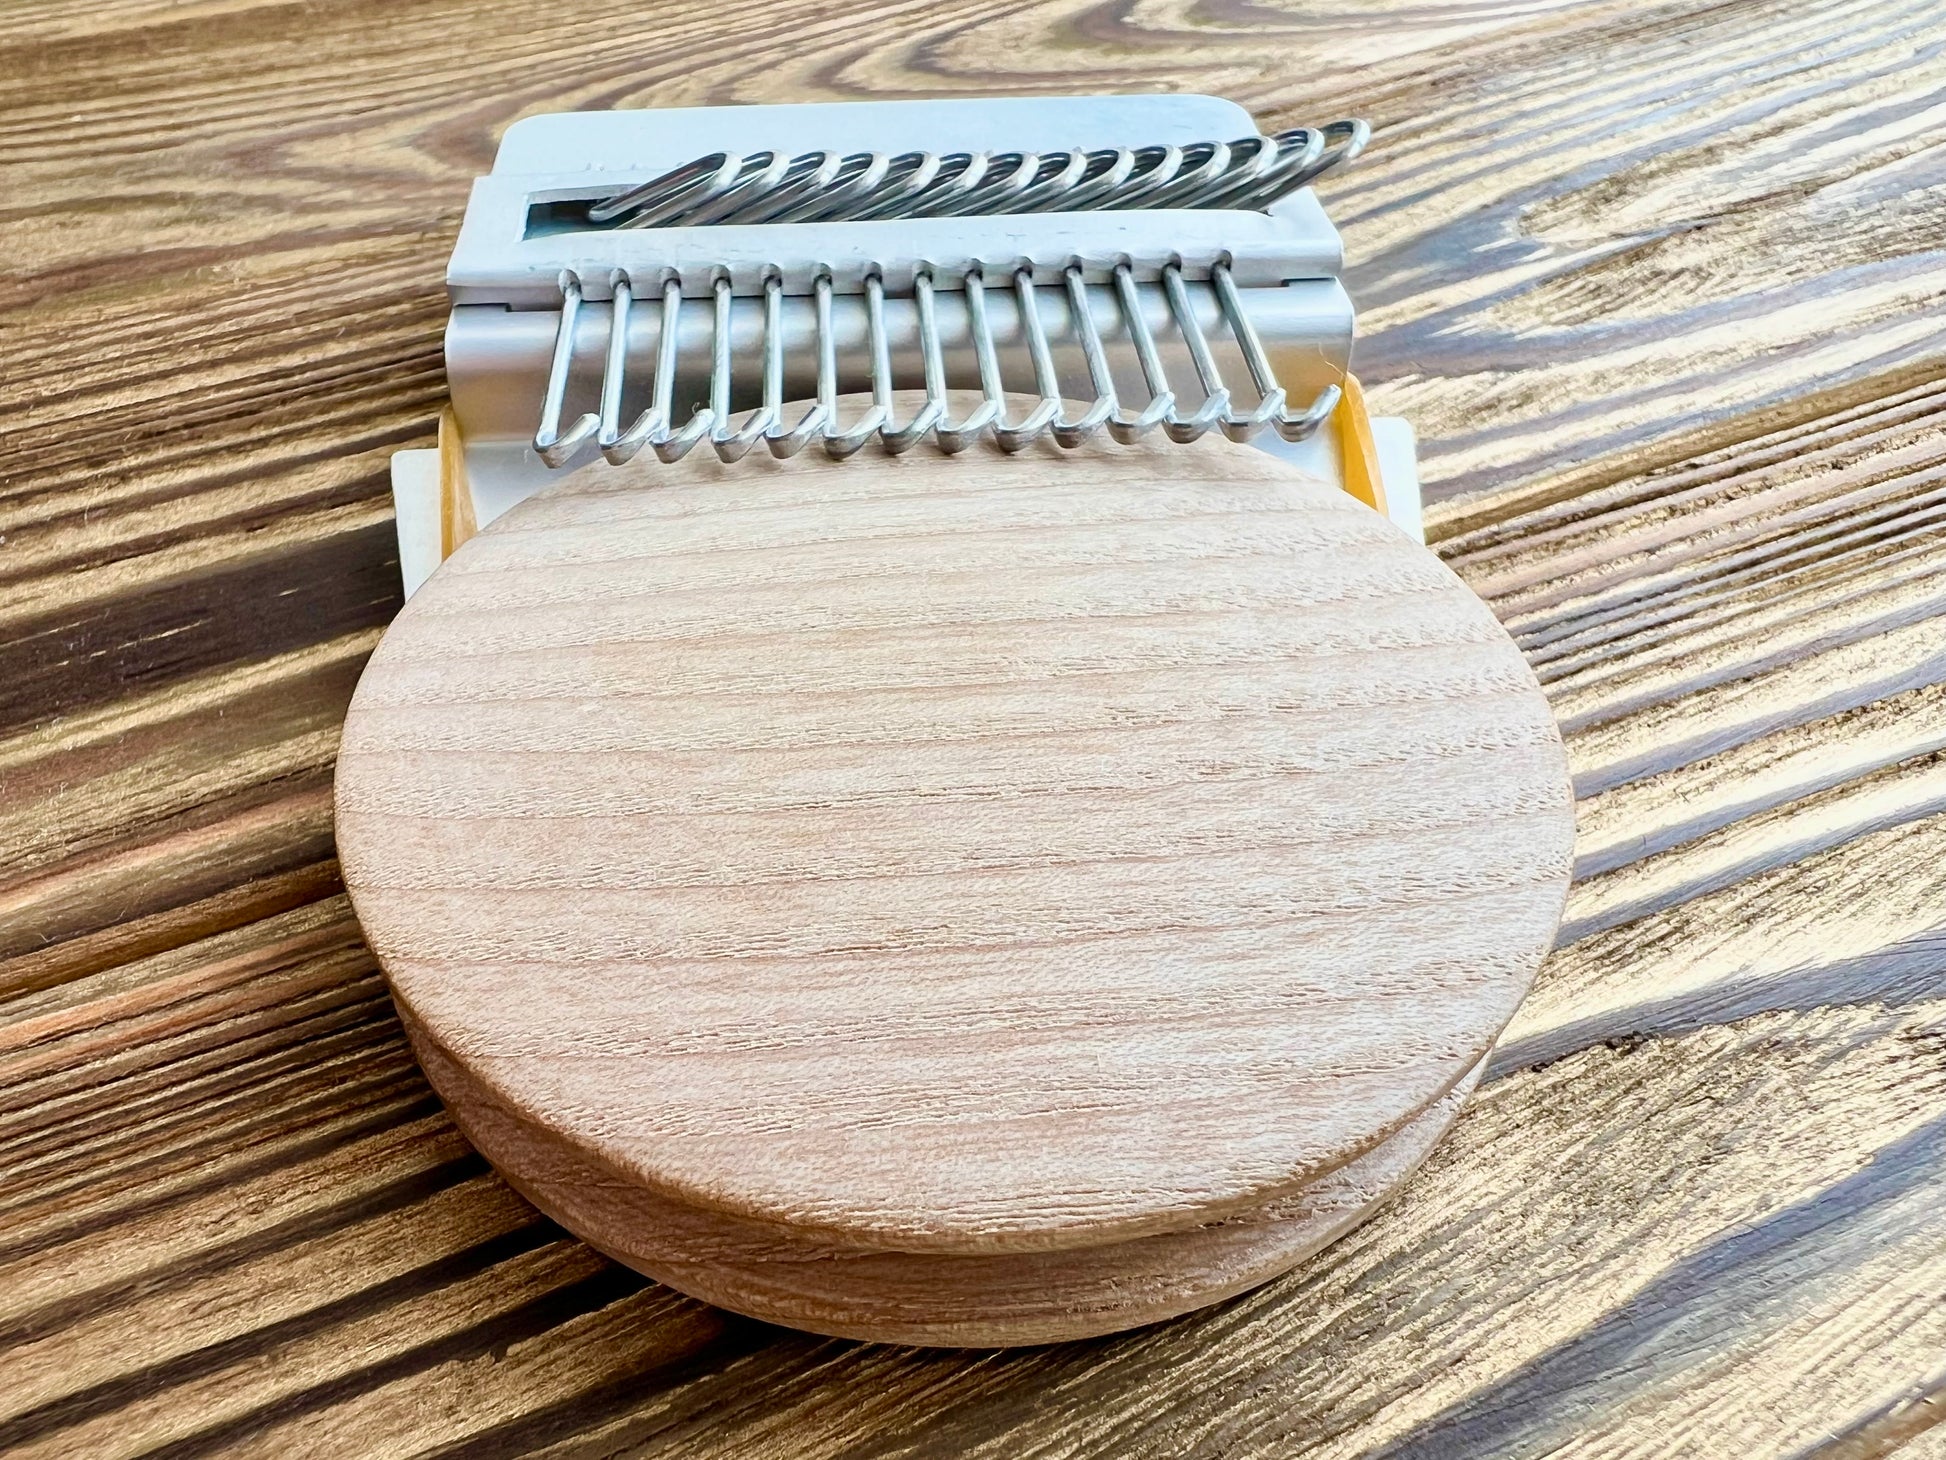  Tshiwort Small Looms for Weaving - Loom Speedweve Type